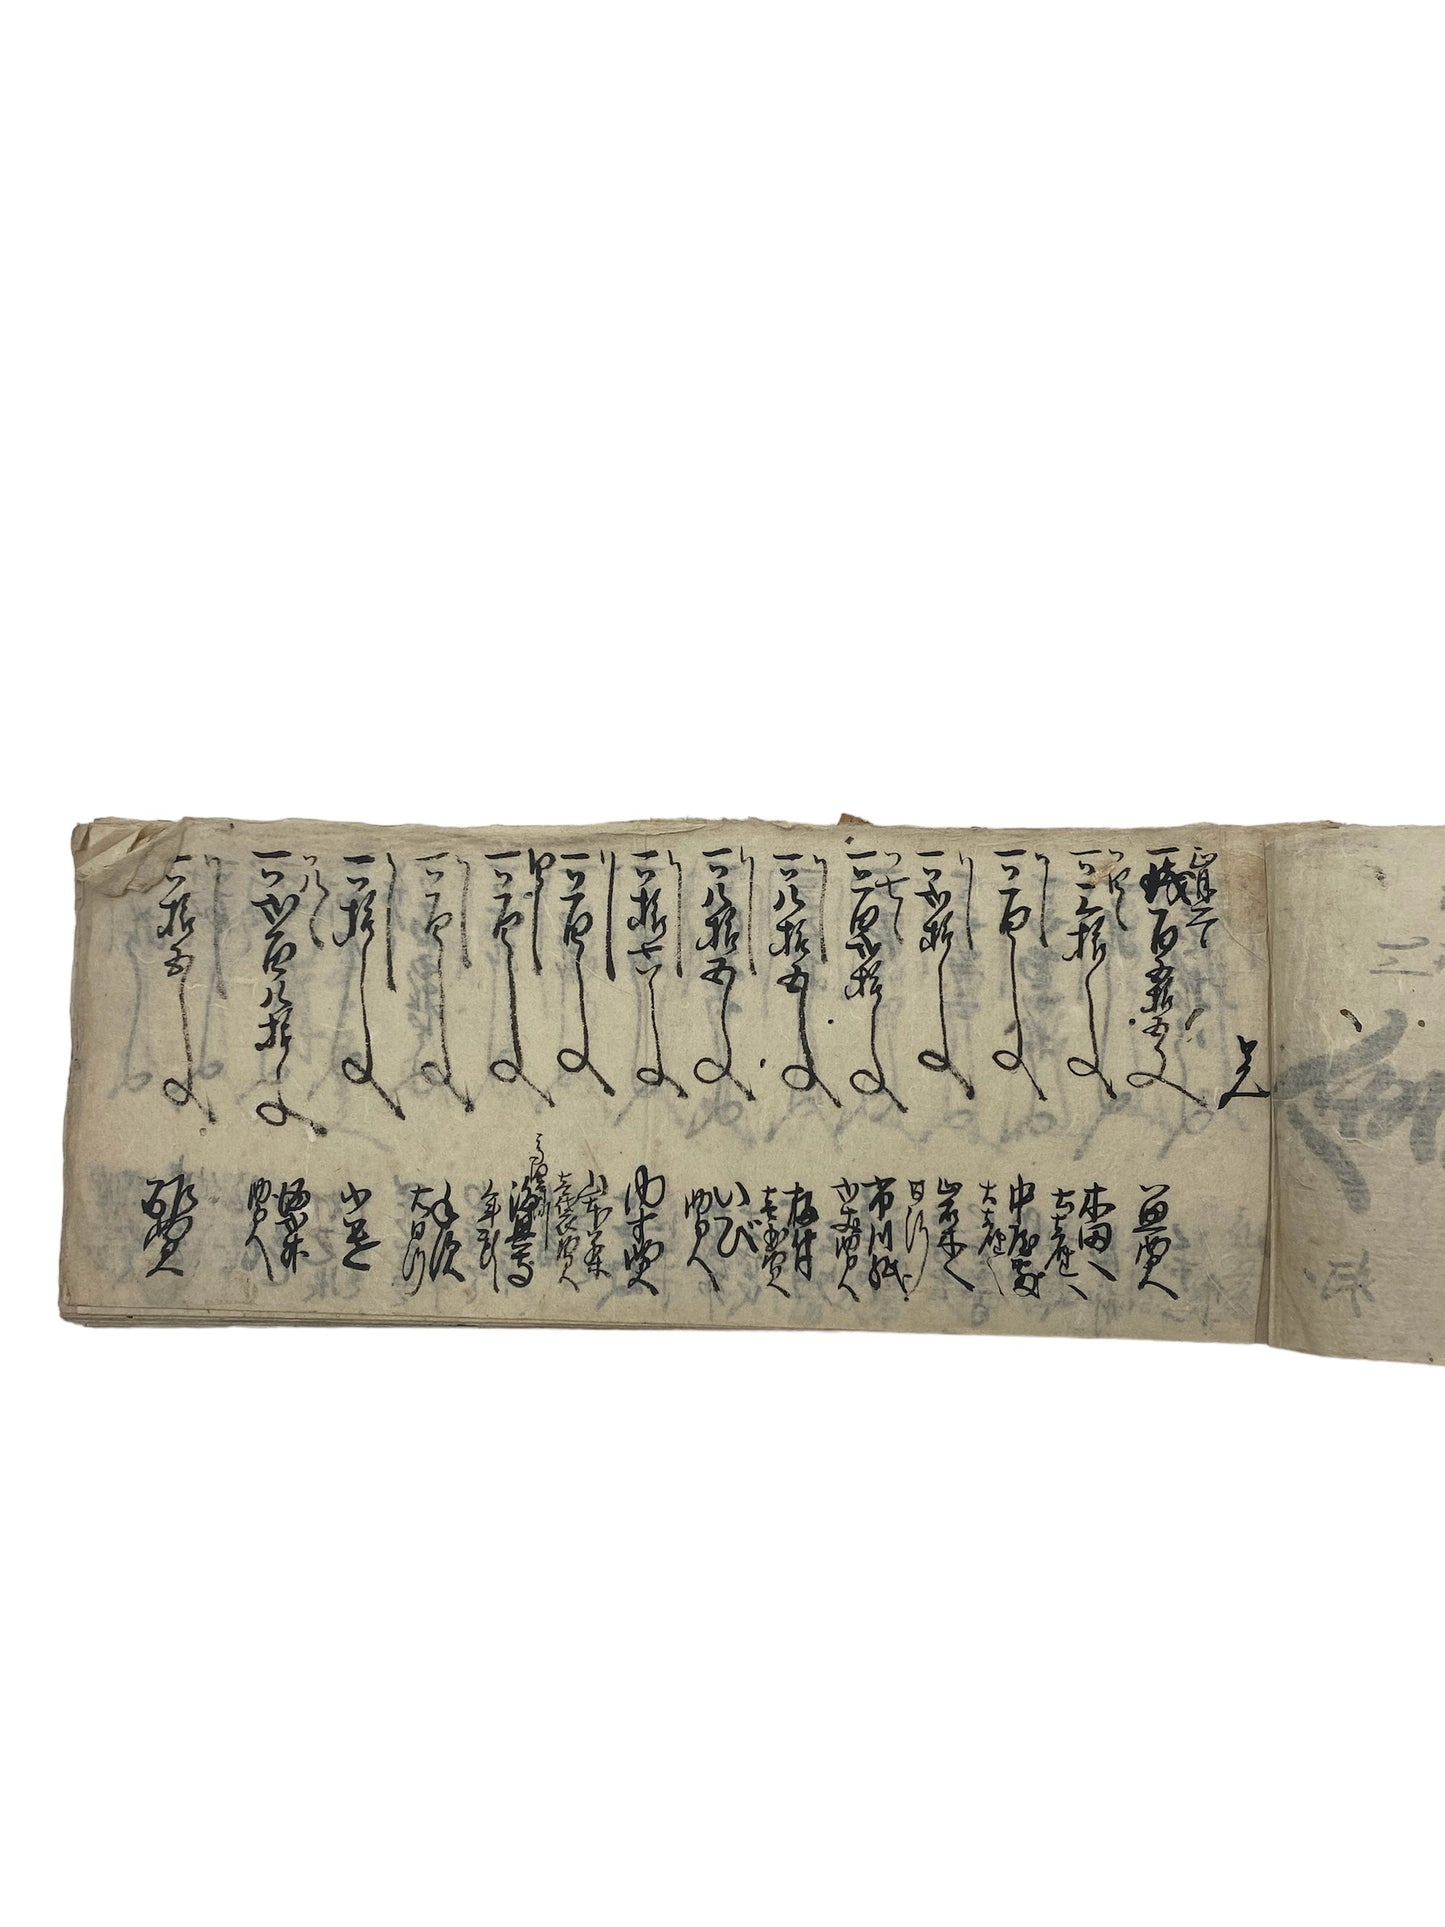 Handwritten merchant shop ledgers from the Edo period 1859